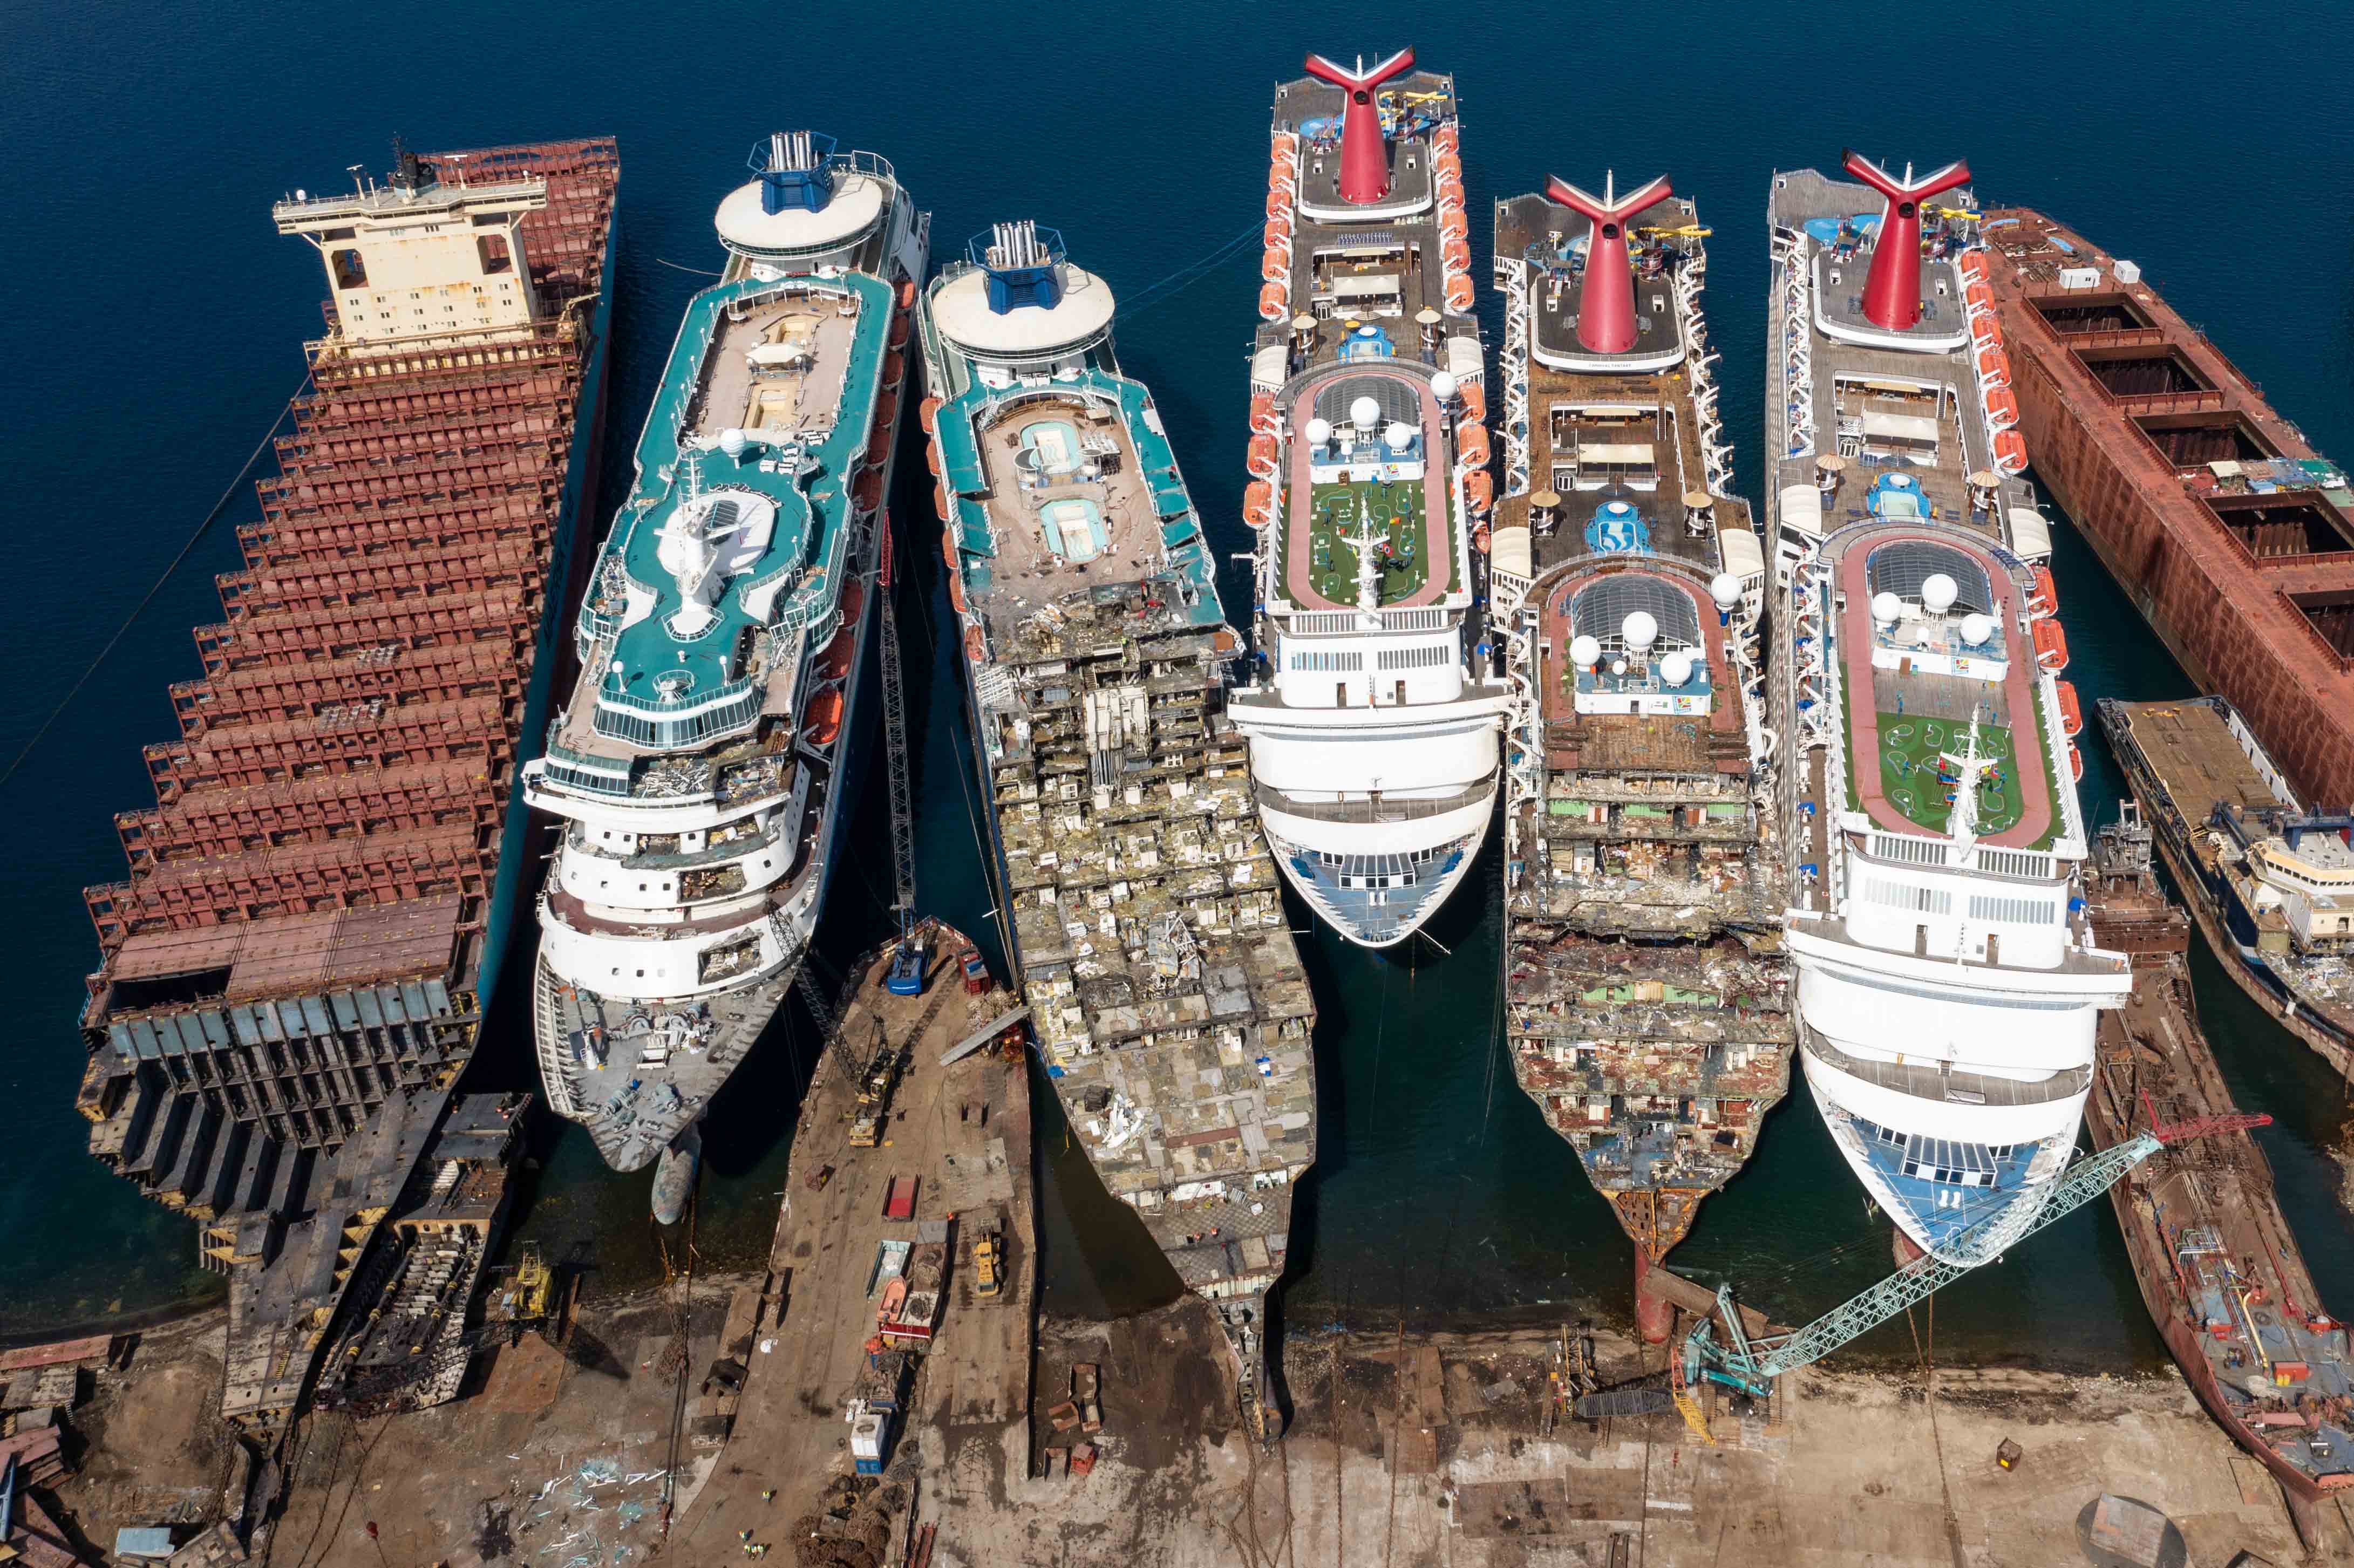 Ships being broken down for scrap metal at the Aliaga ship recycling port&nbsp;in Izmir, Turkey.&nbsp;